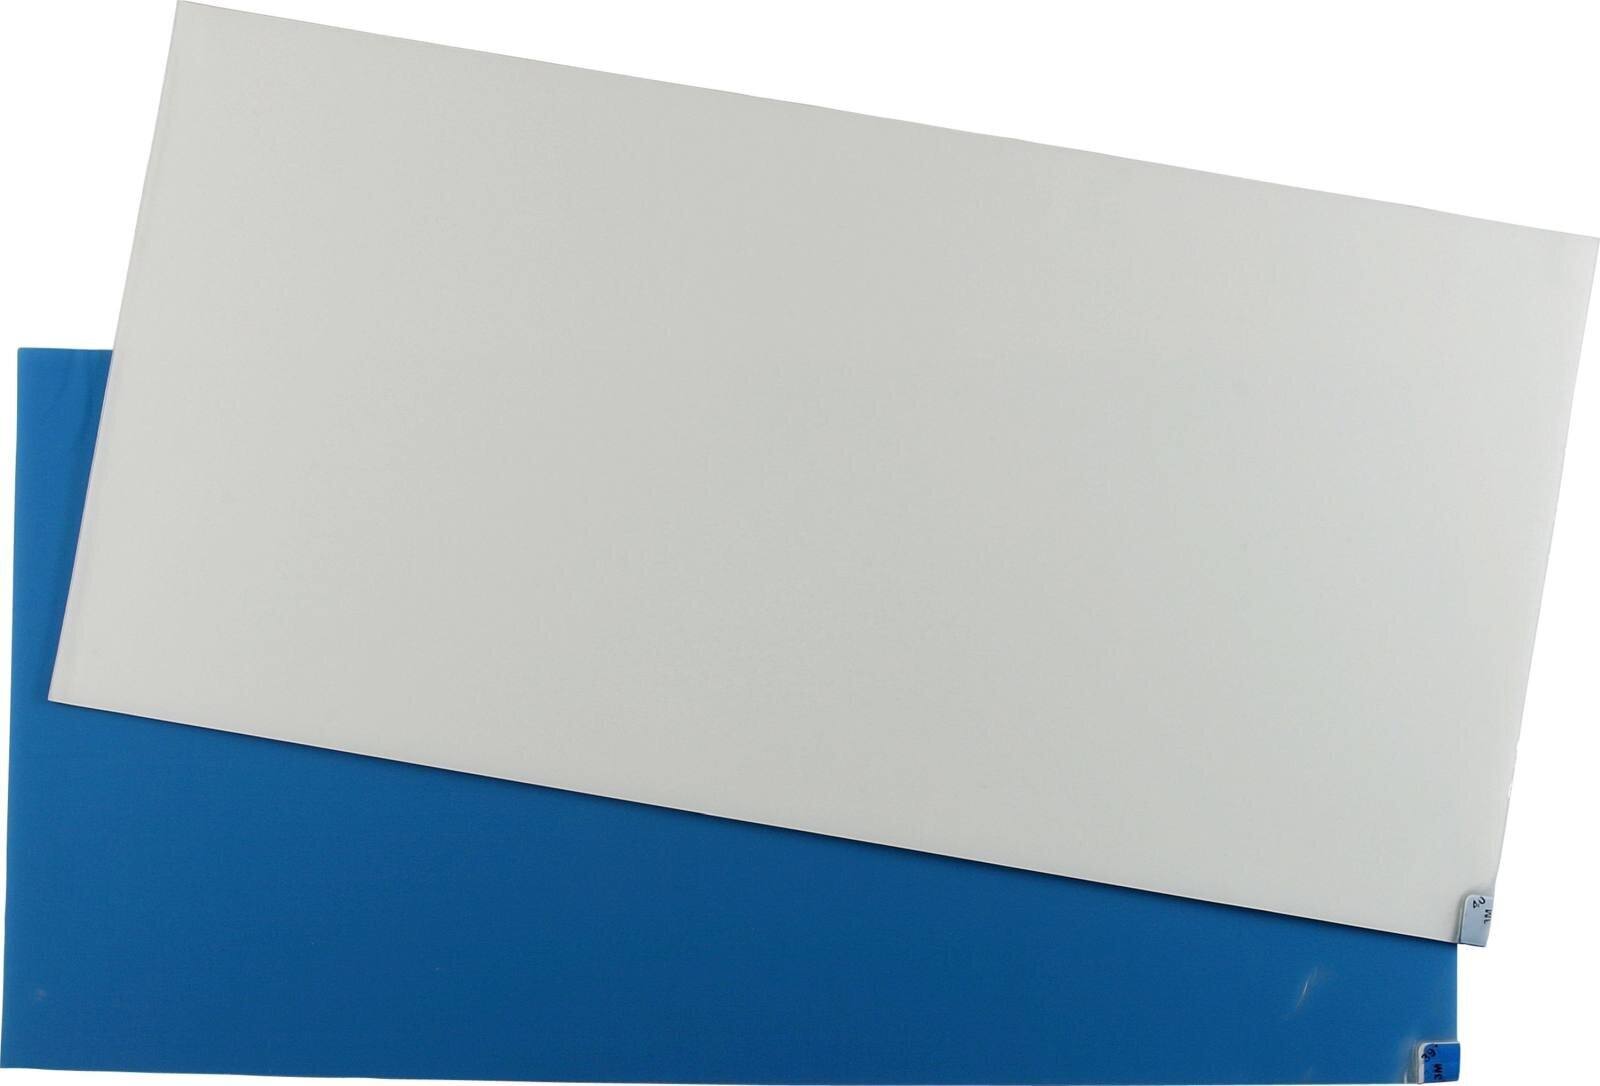 3M 4300 Nomad Fine Dust Adhesive Mat, white, 1.15m x 0.6m, 40pcs transparent polyethylene layers